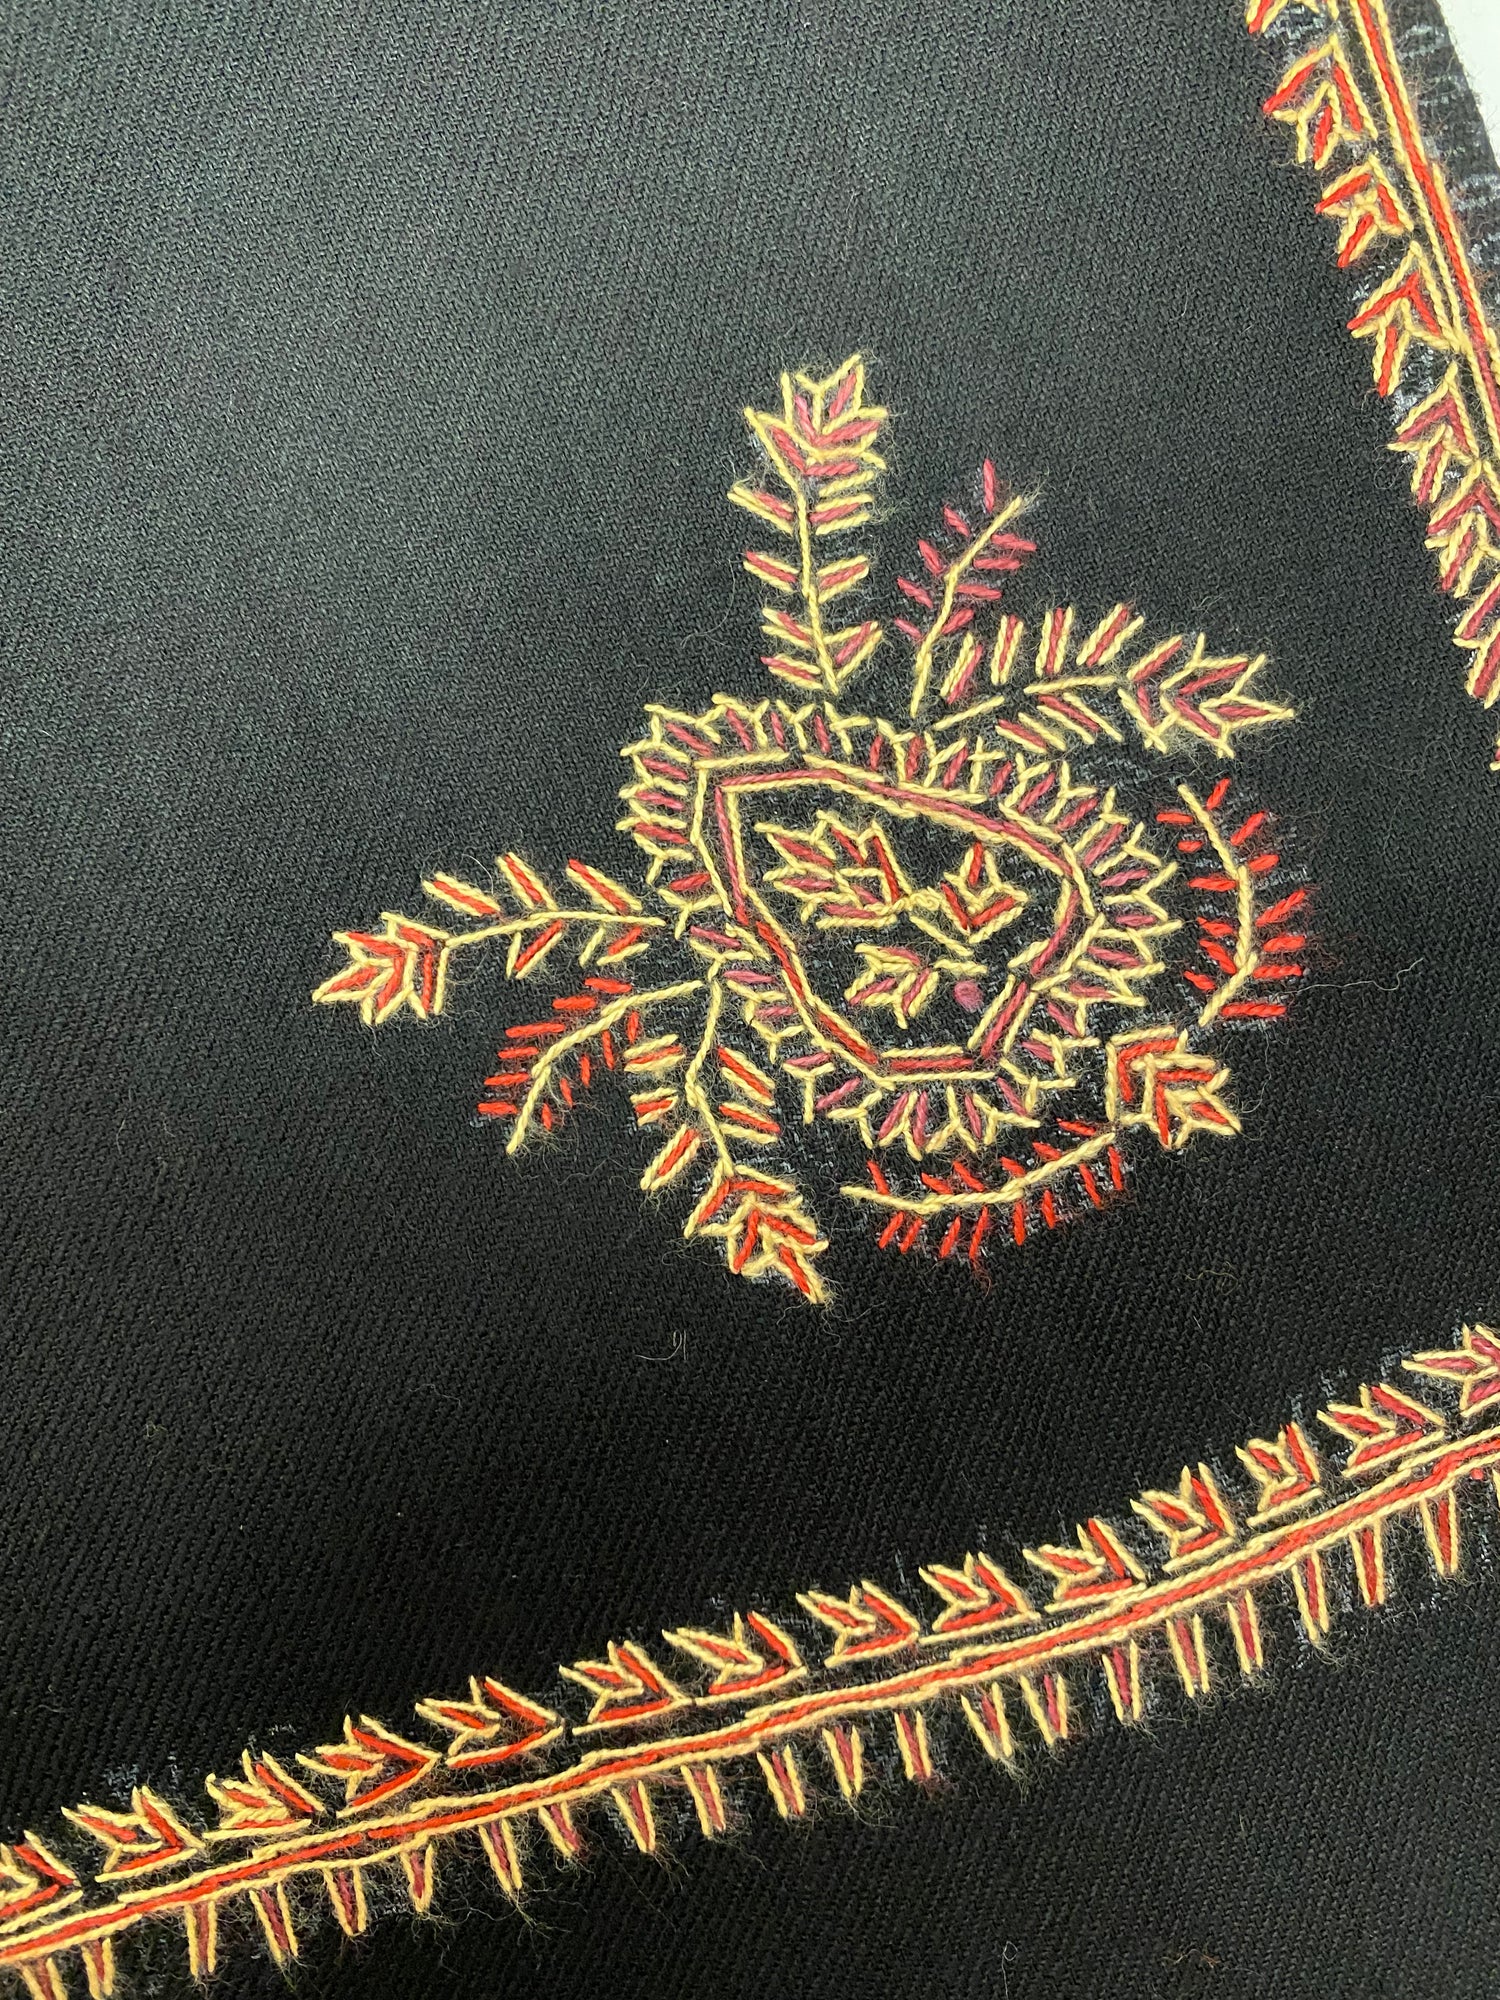 Alia Pure Pashmina Embroidered Shawl - Chaddors